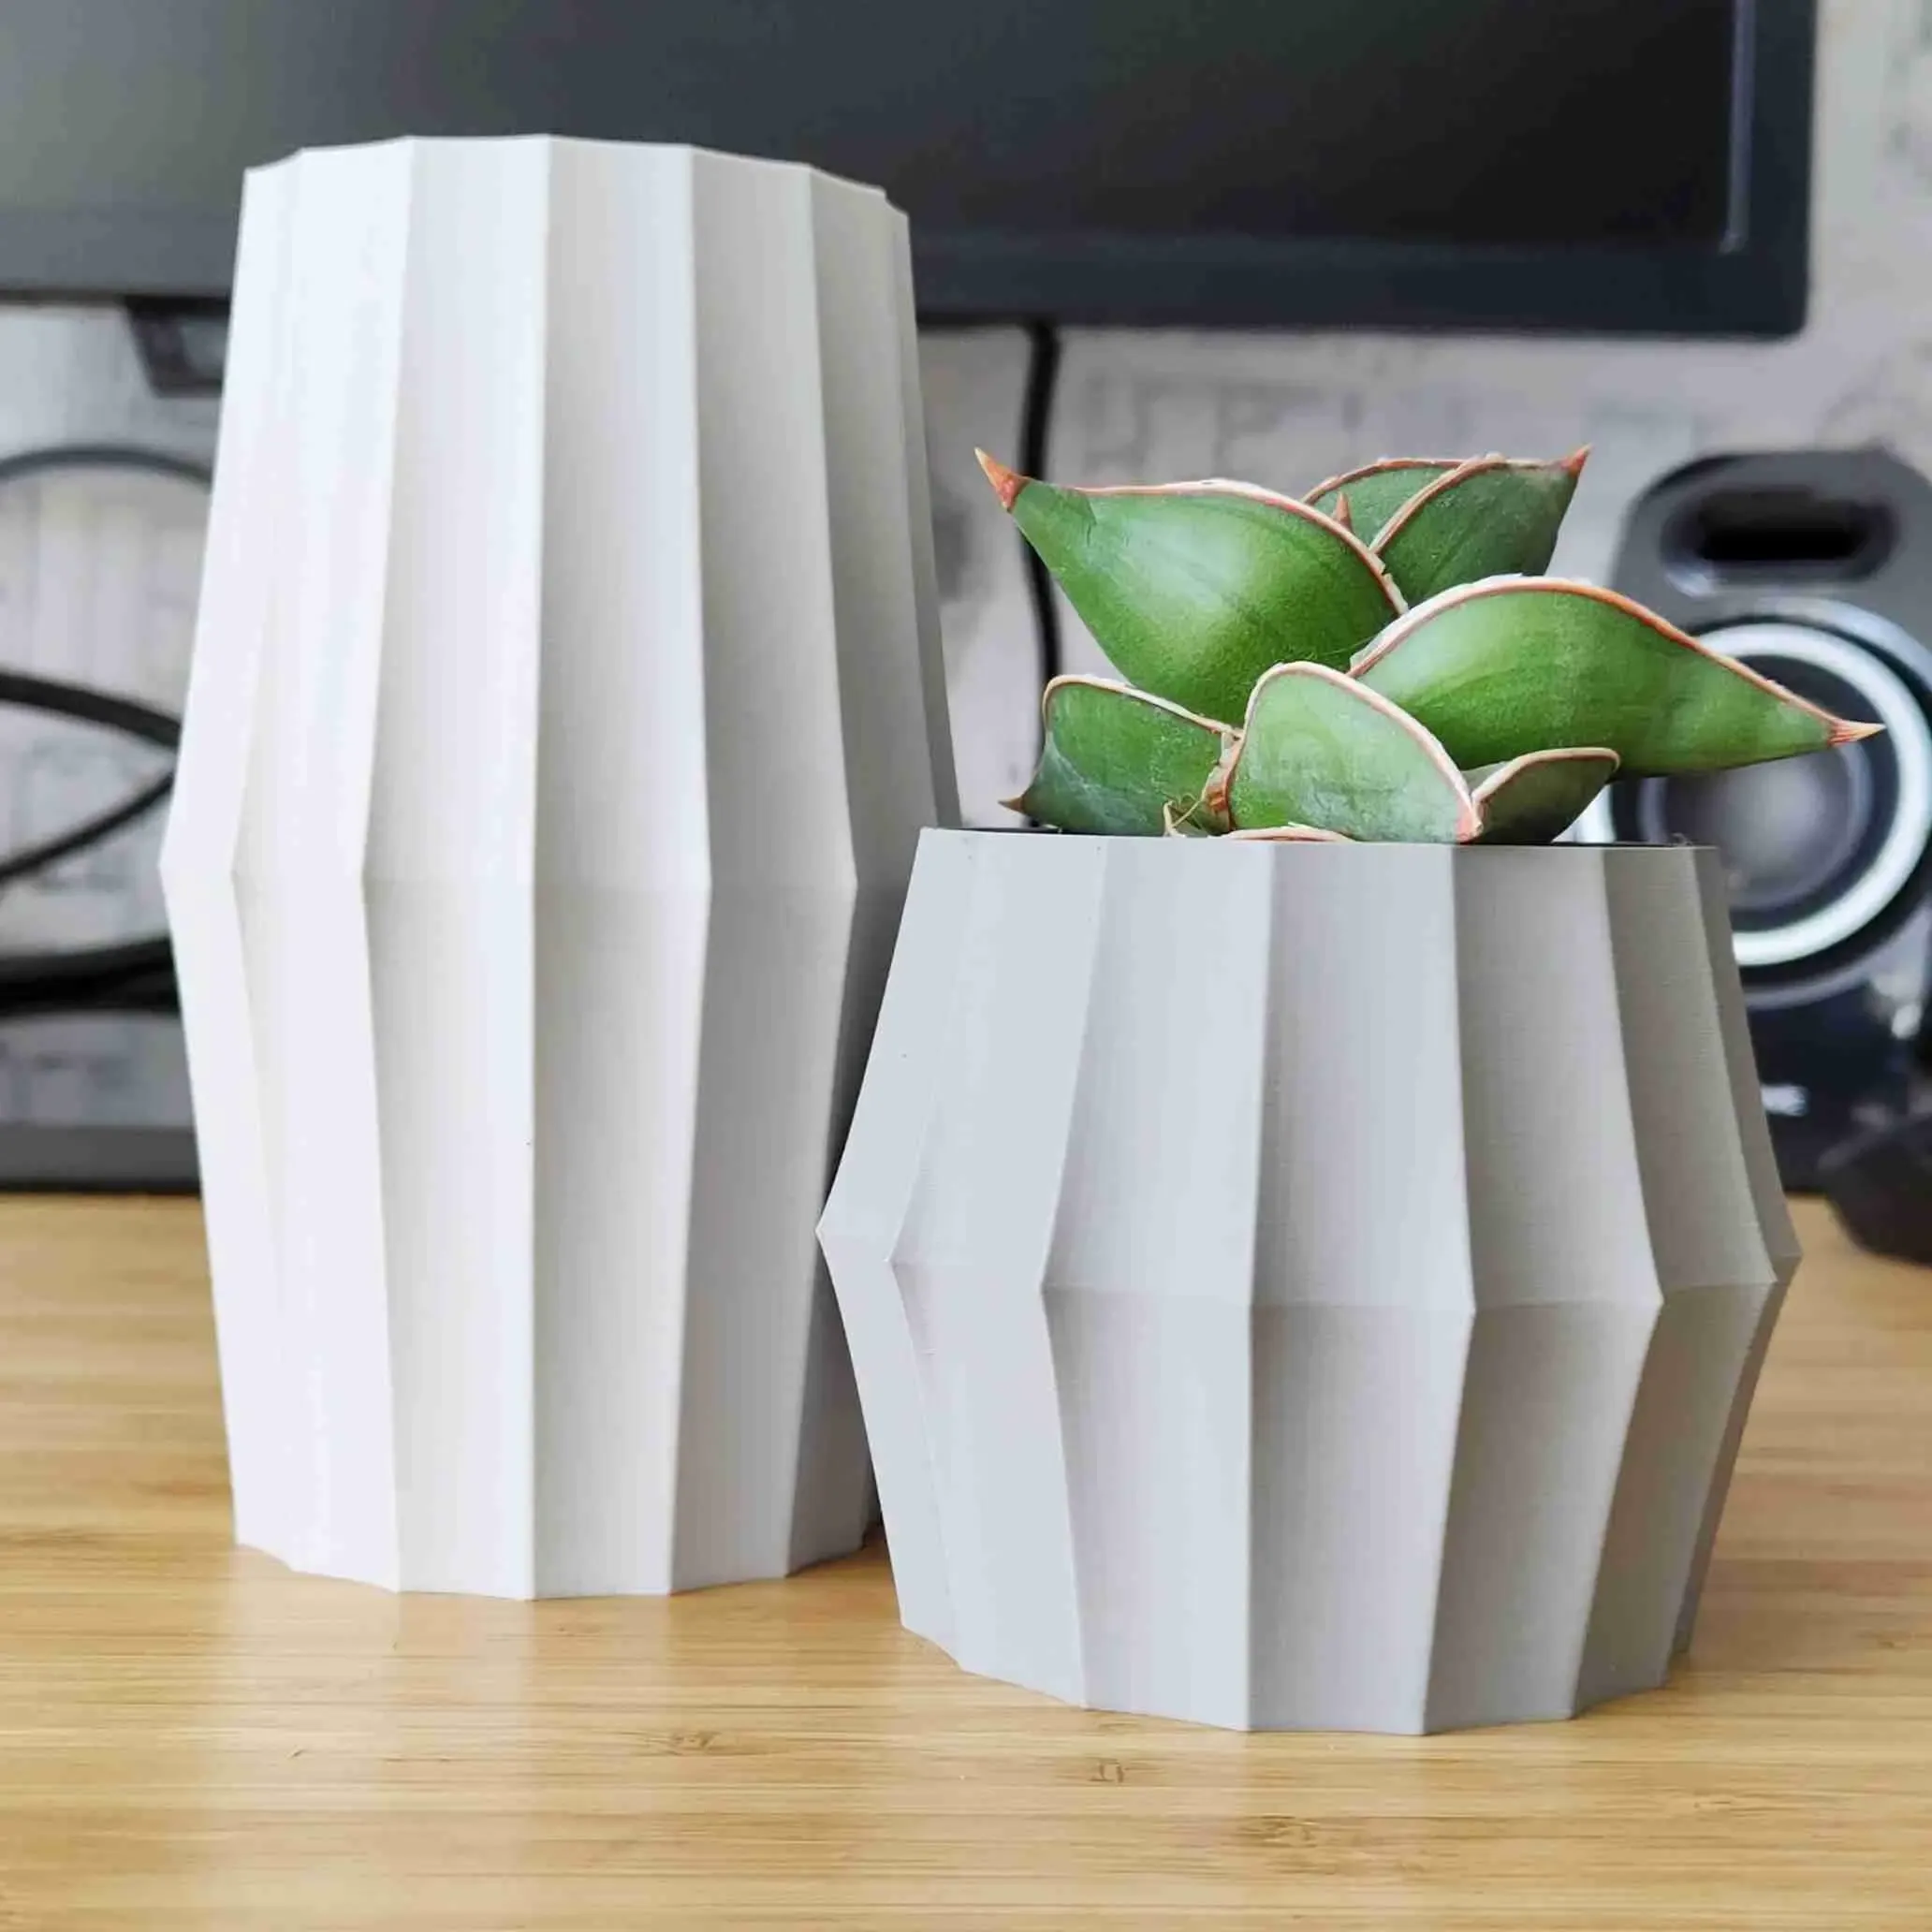 Bamboo Pot and Planter - Vase mode design